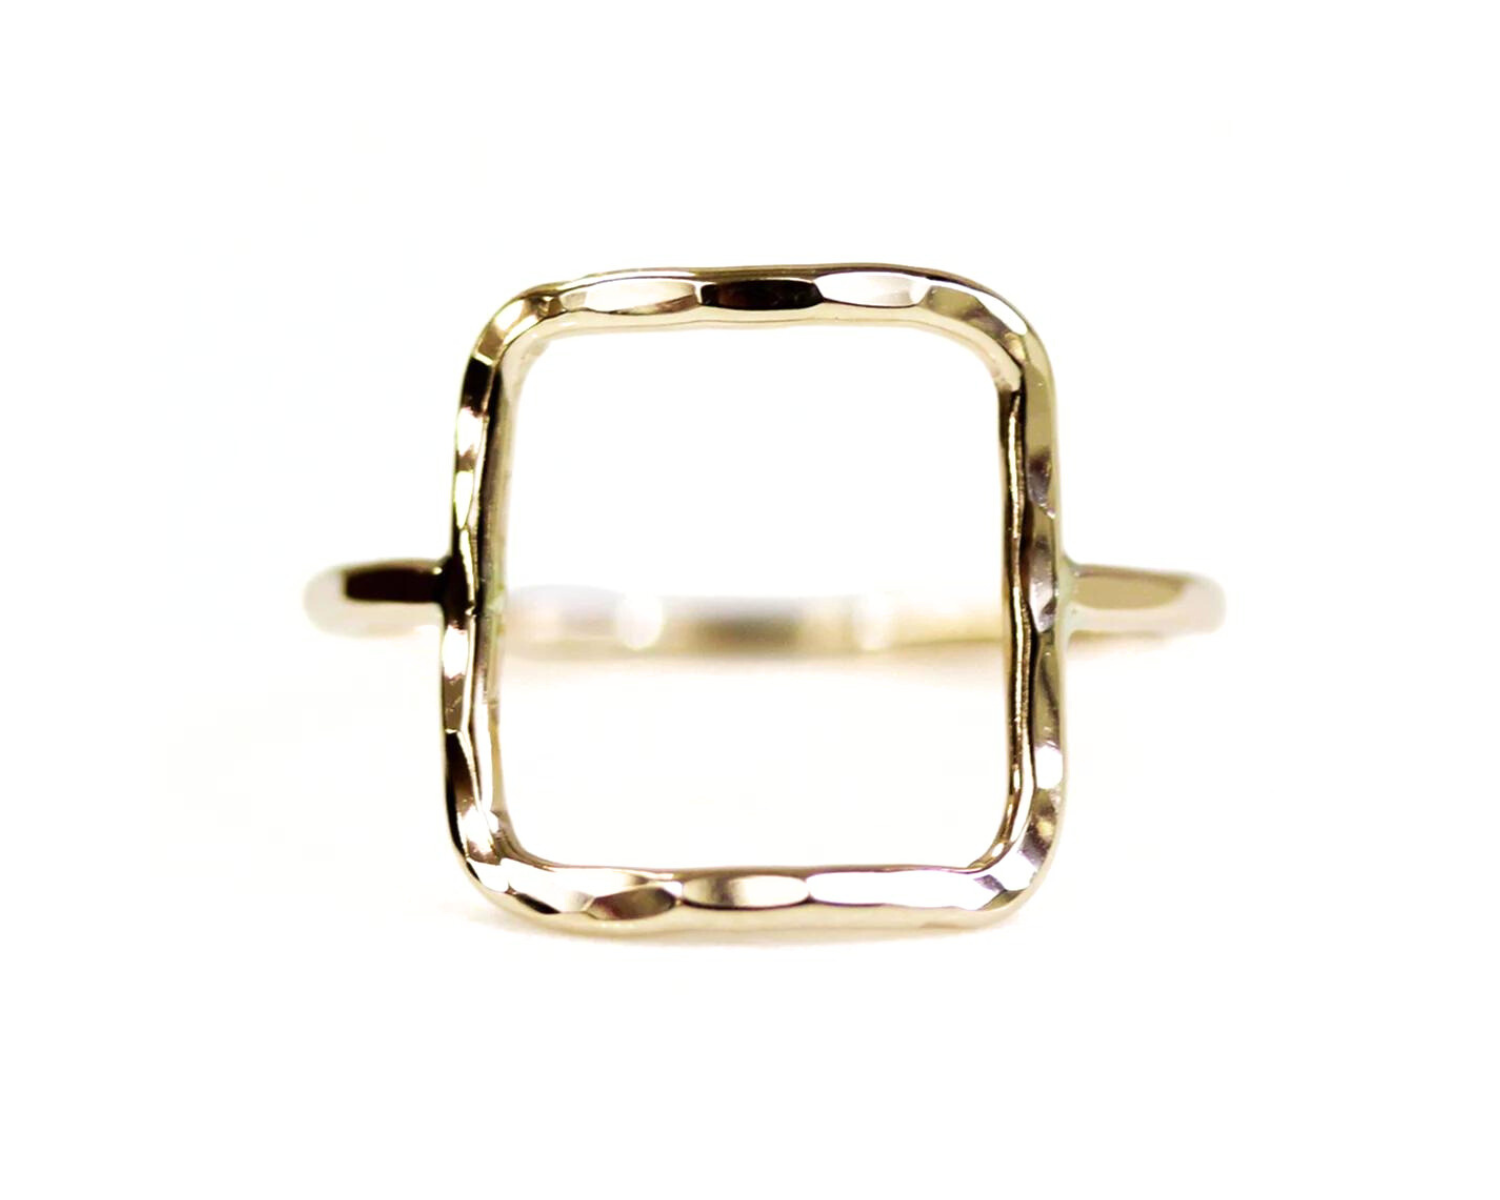 Studio Jewellery Super Fine Simple Sterling Silver Ring